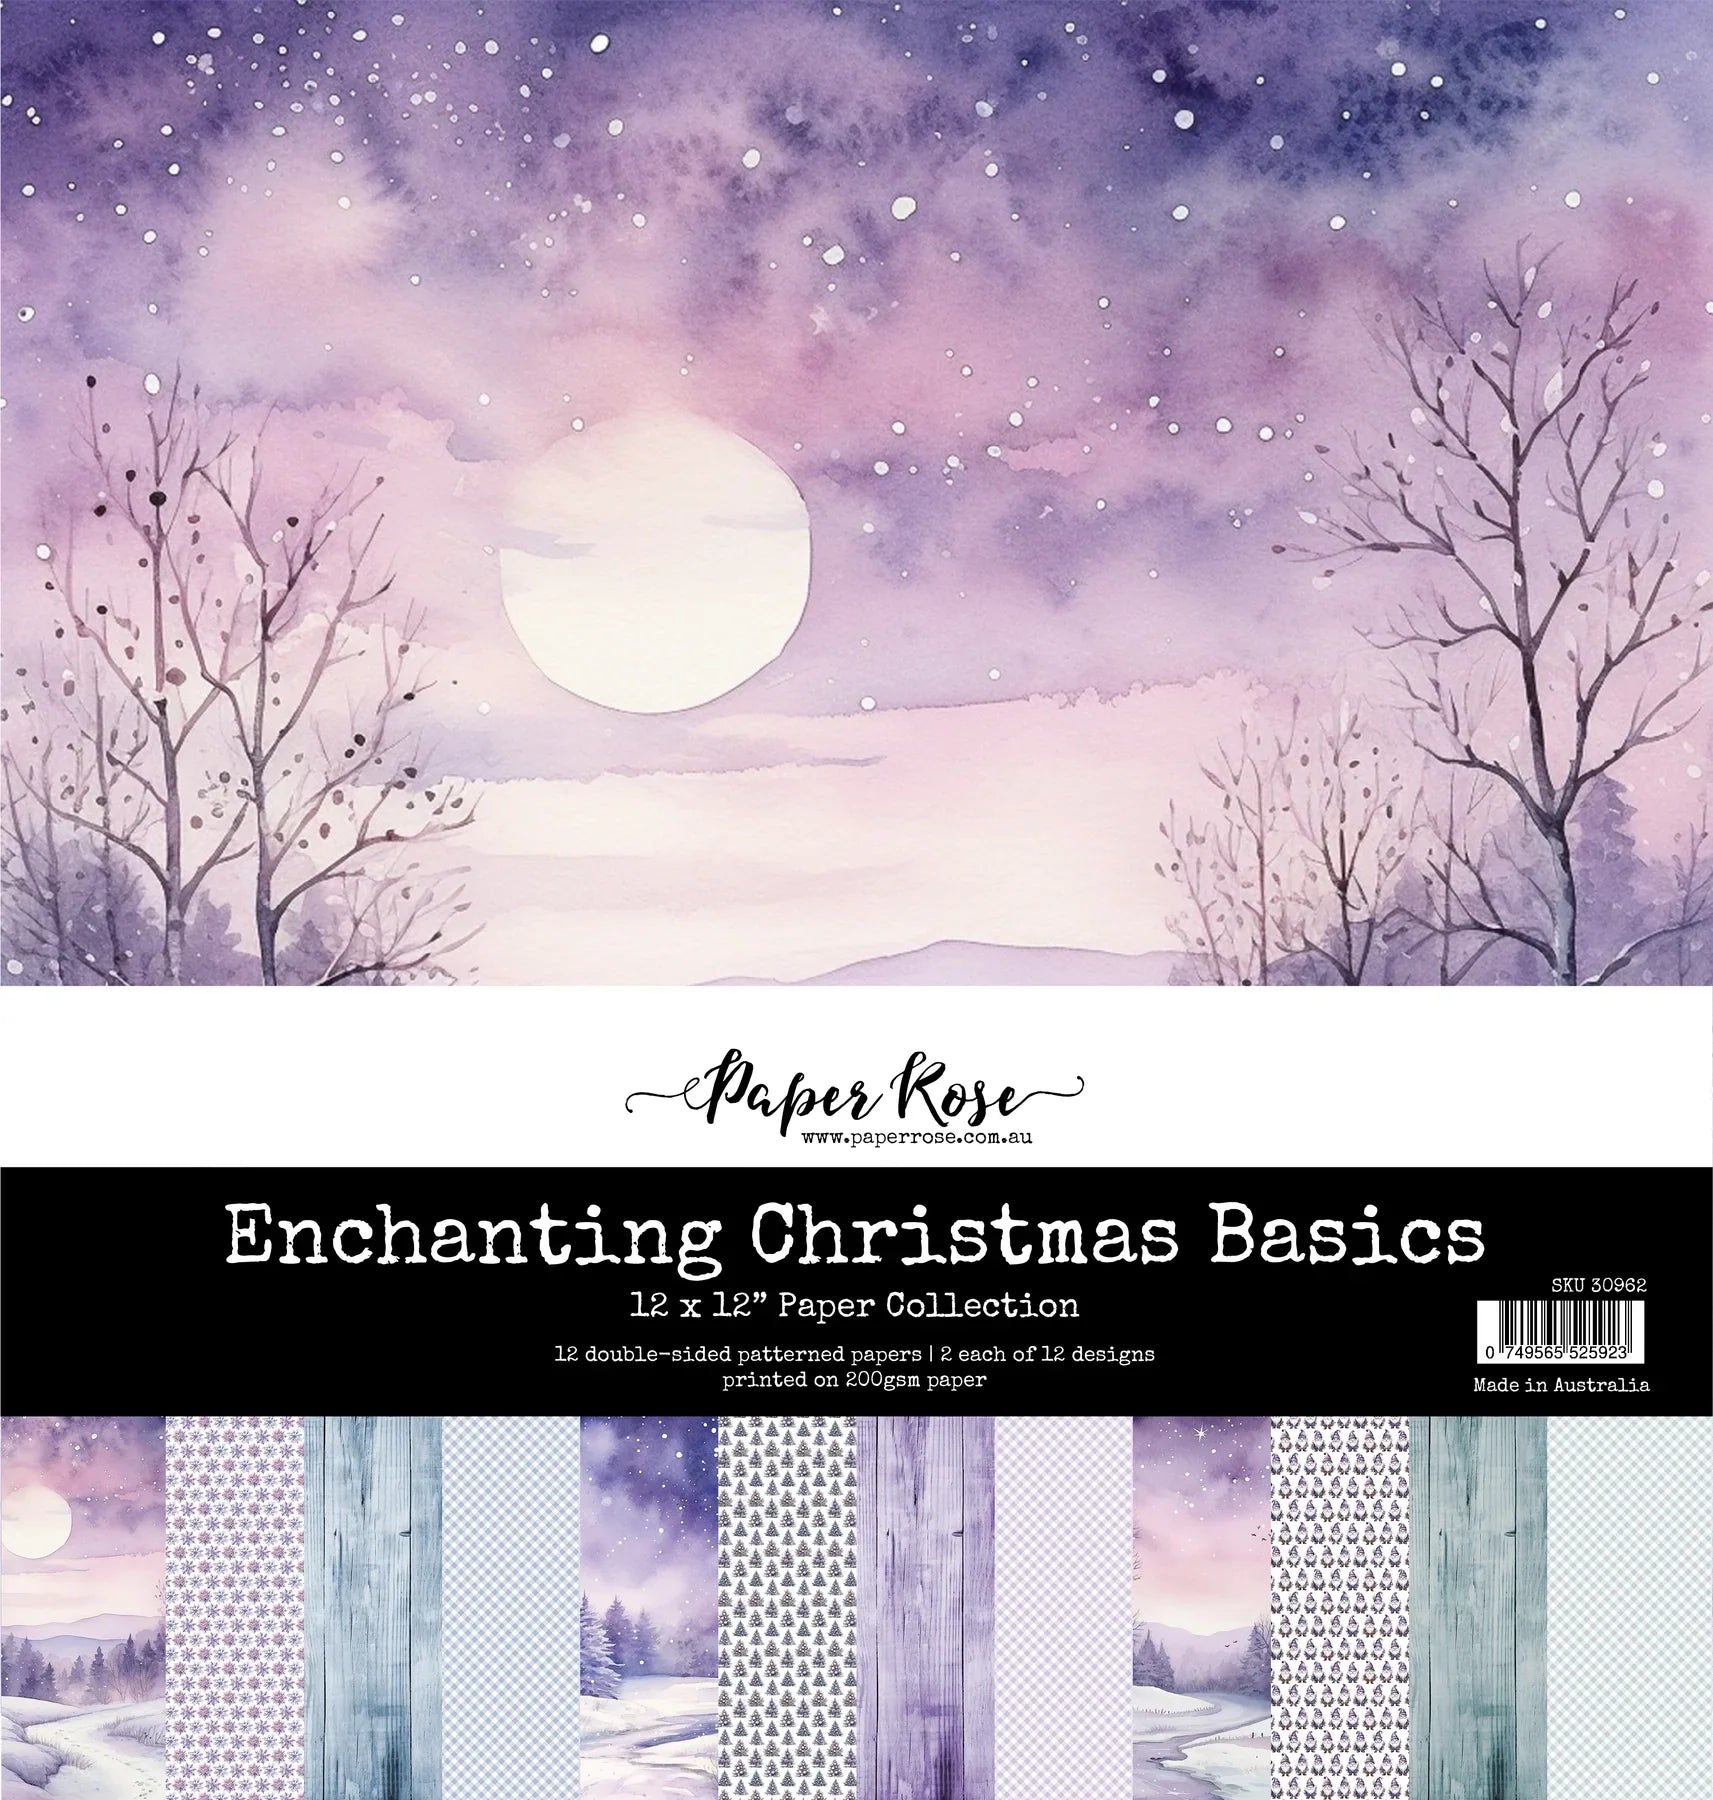 Enchanting Christmas Basics 12x12 Paper Collection